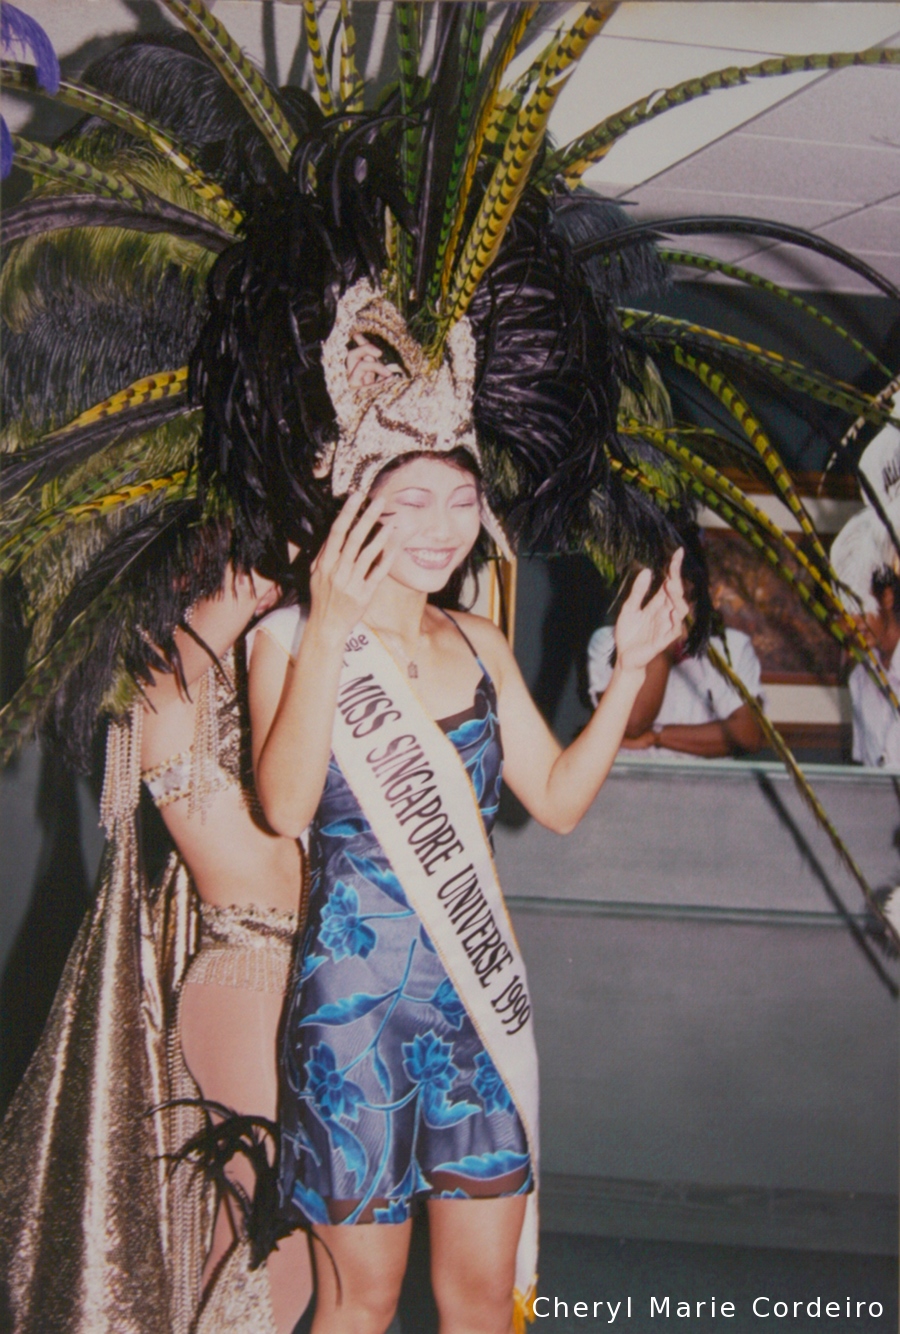 Cheryl Marie Cordeir, Trinidad Tobago 1999 